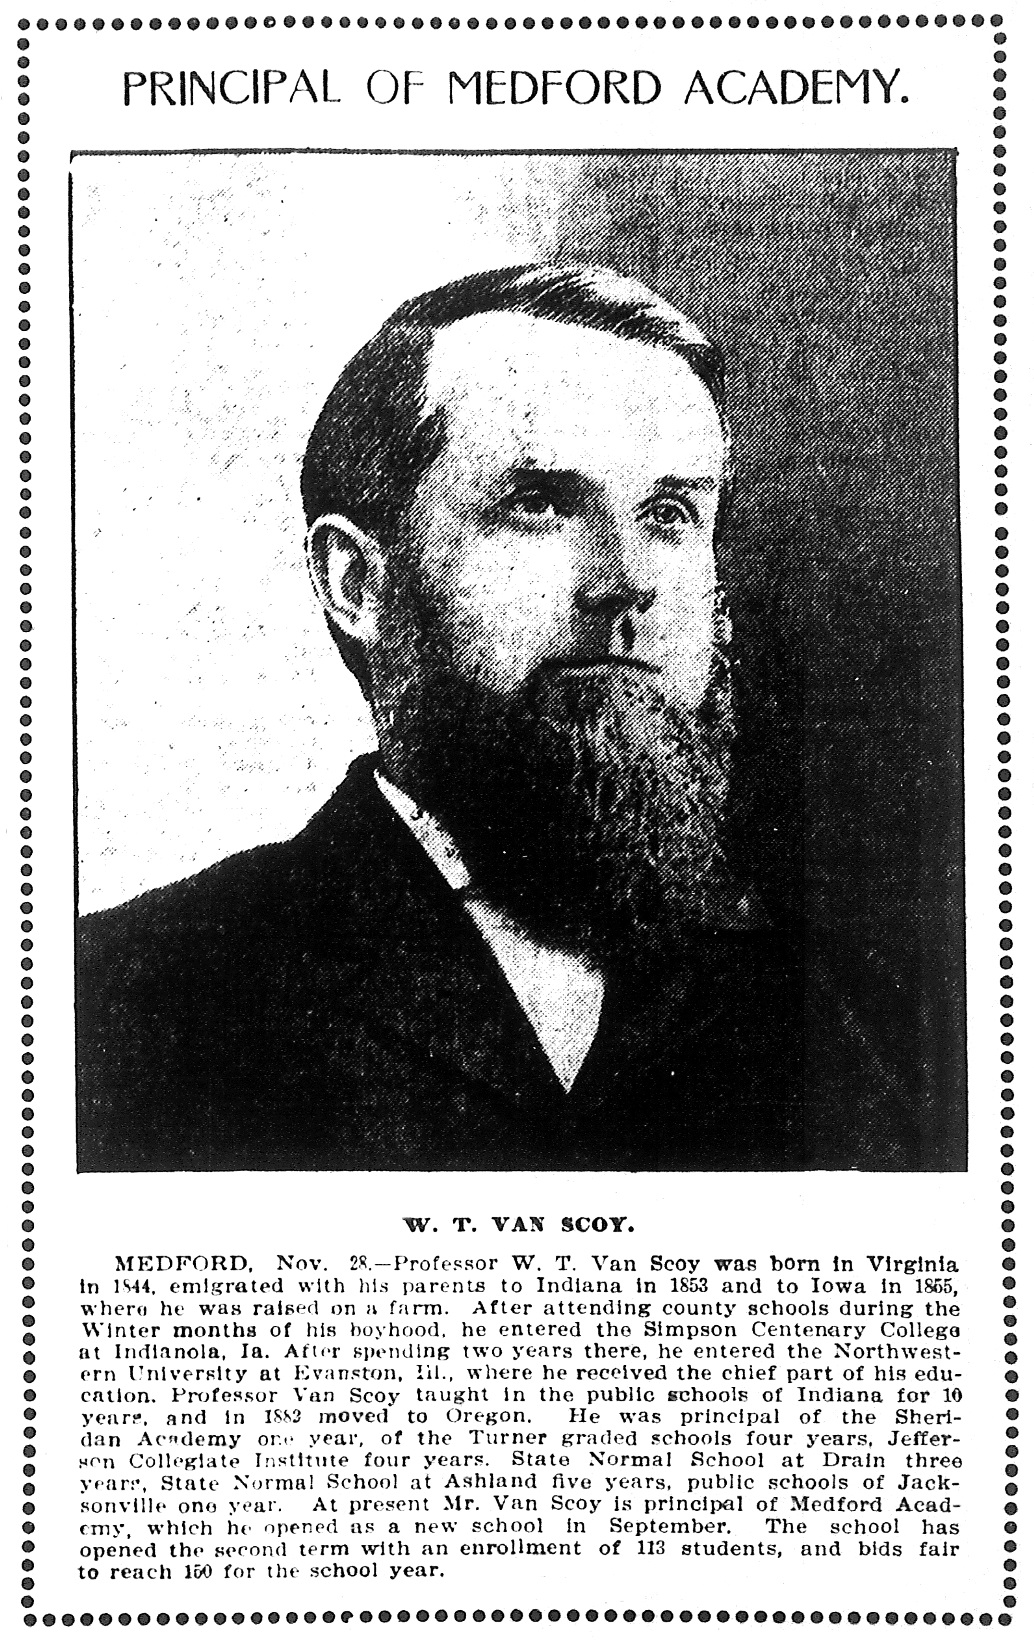 W. T. Van Scoy, November 28, 1901 Portland Telegram